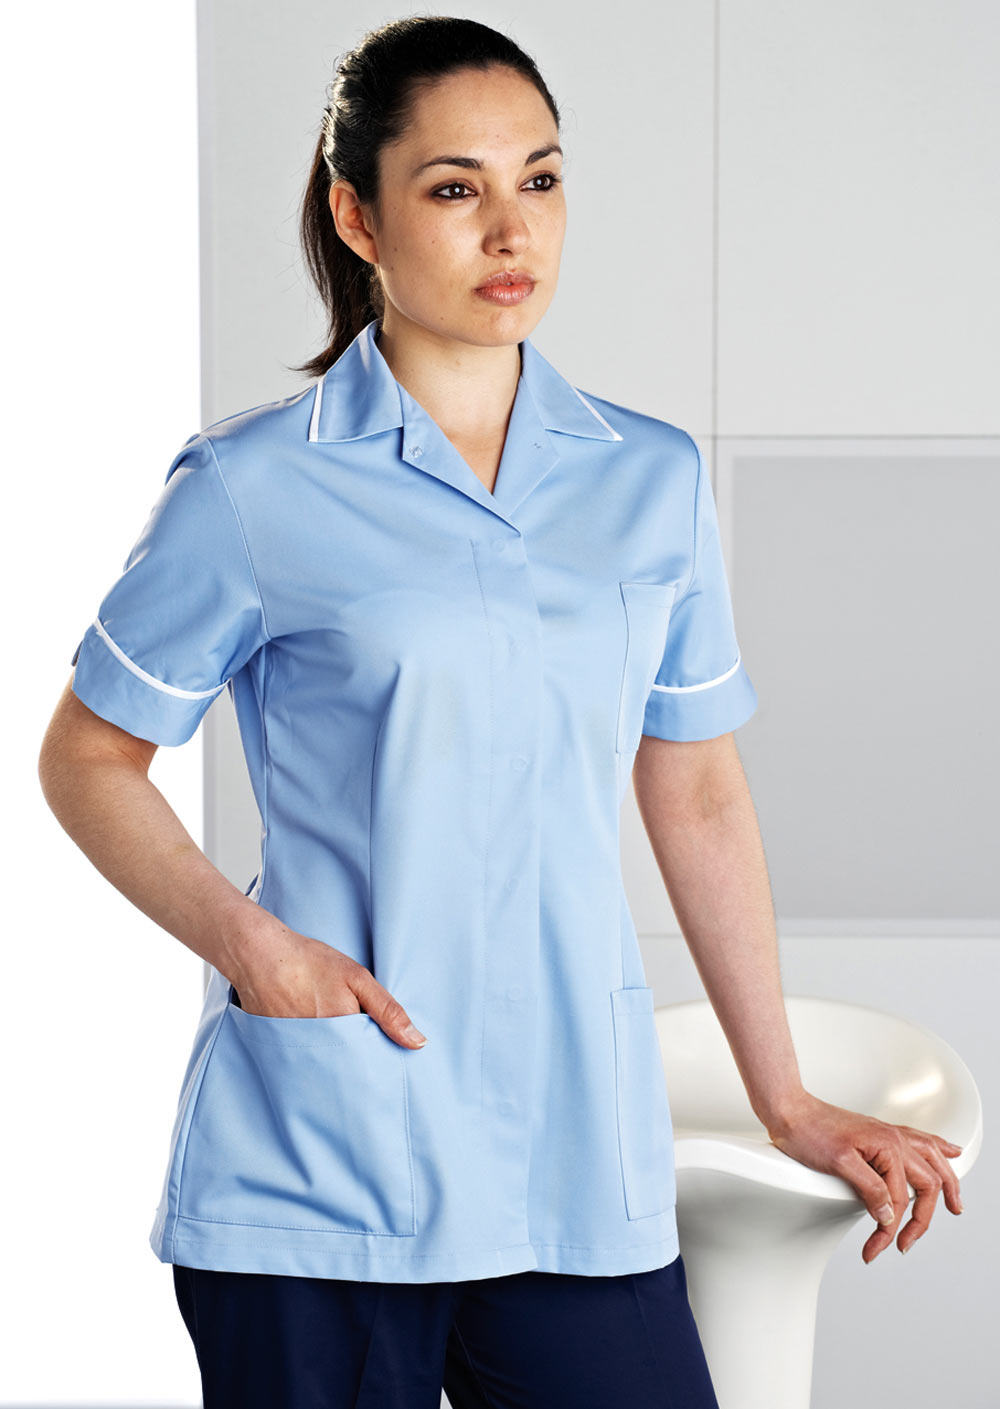 custom made hospital nurse uniforms image